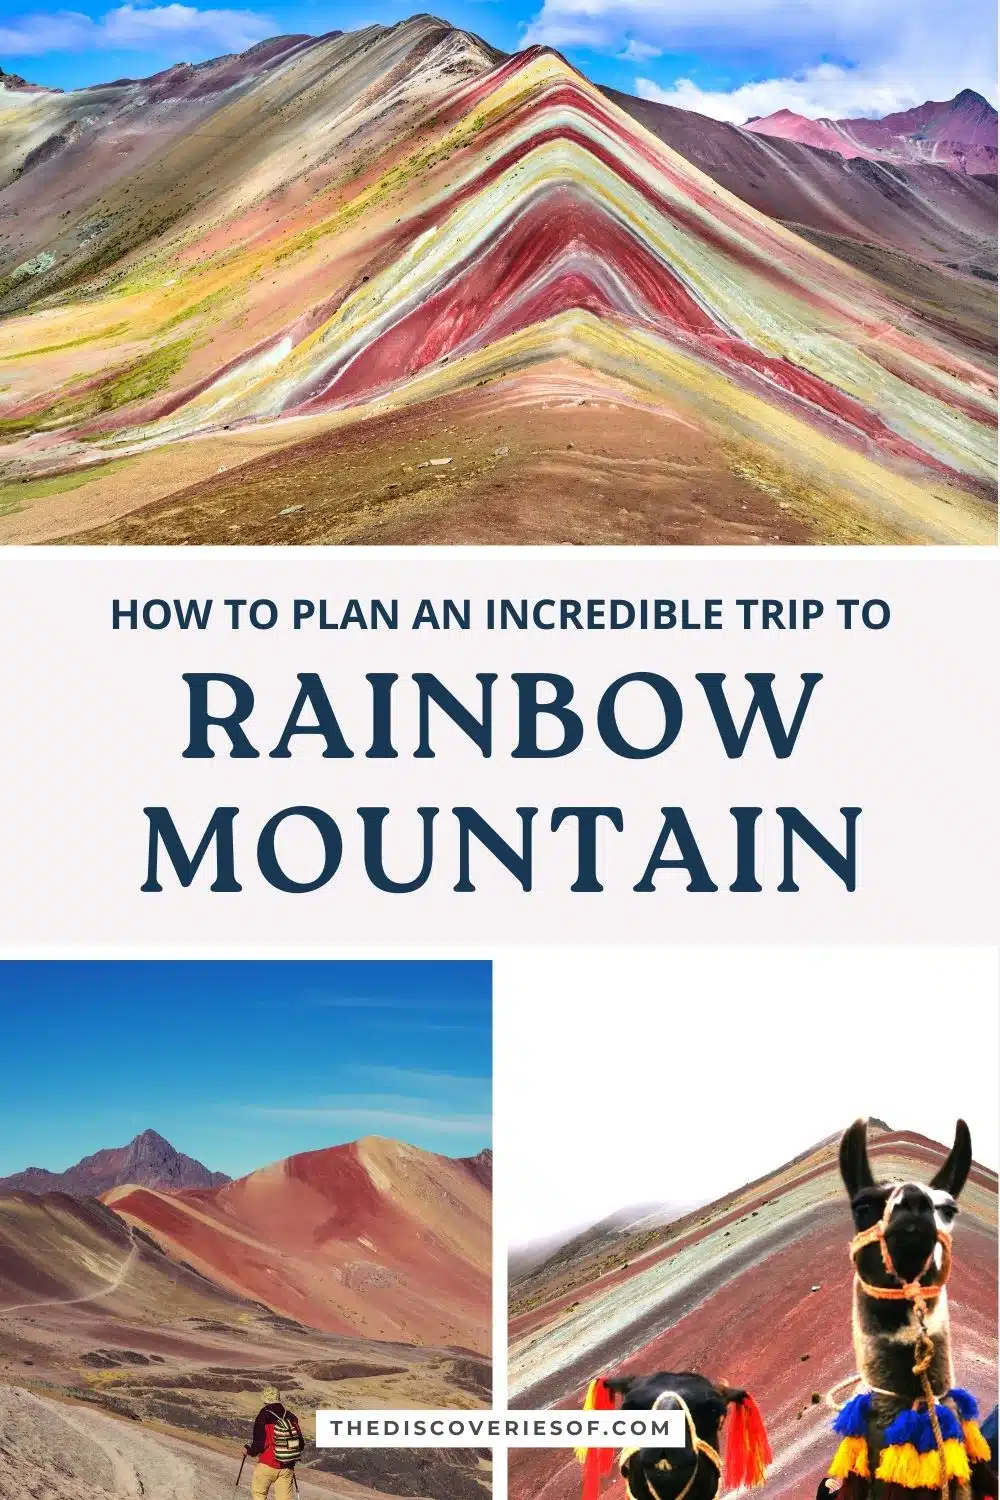 rainbow mountain guided tour